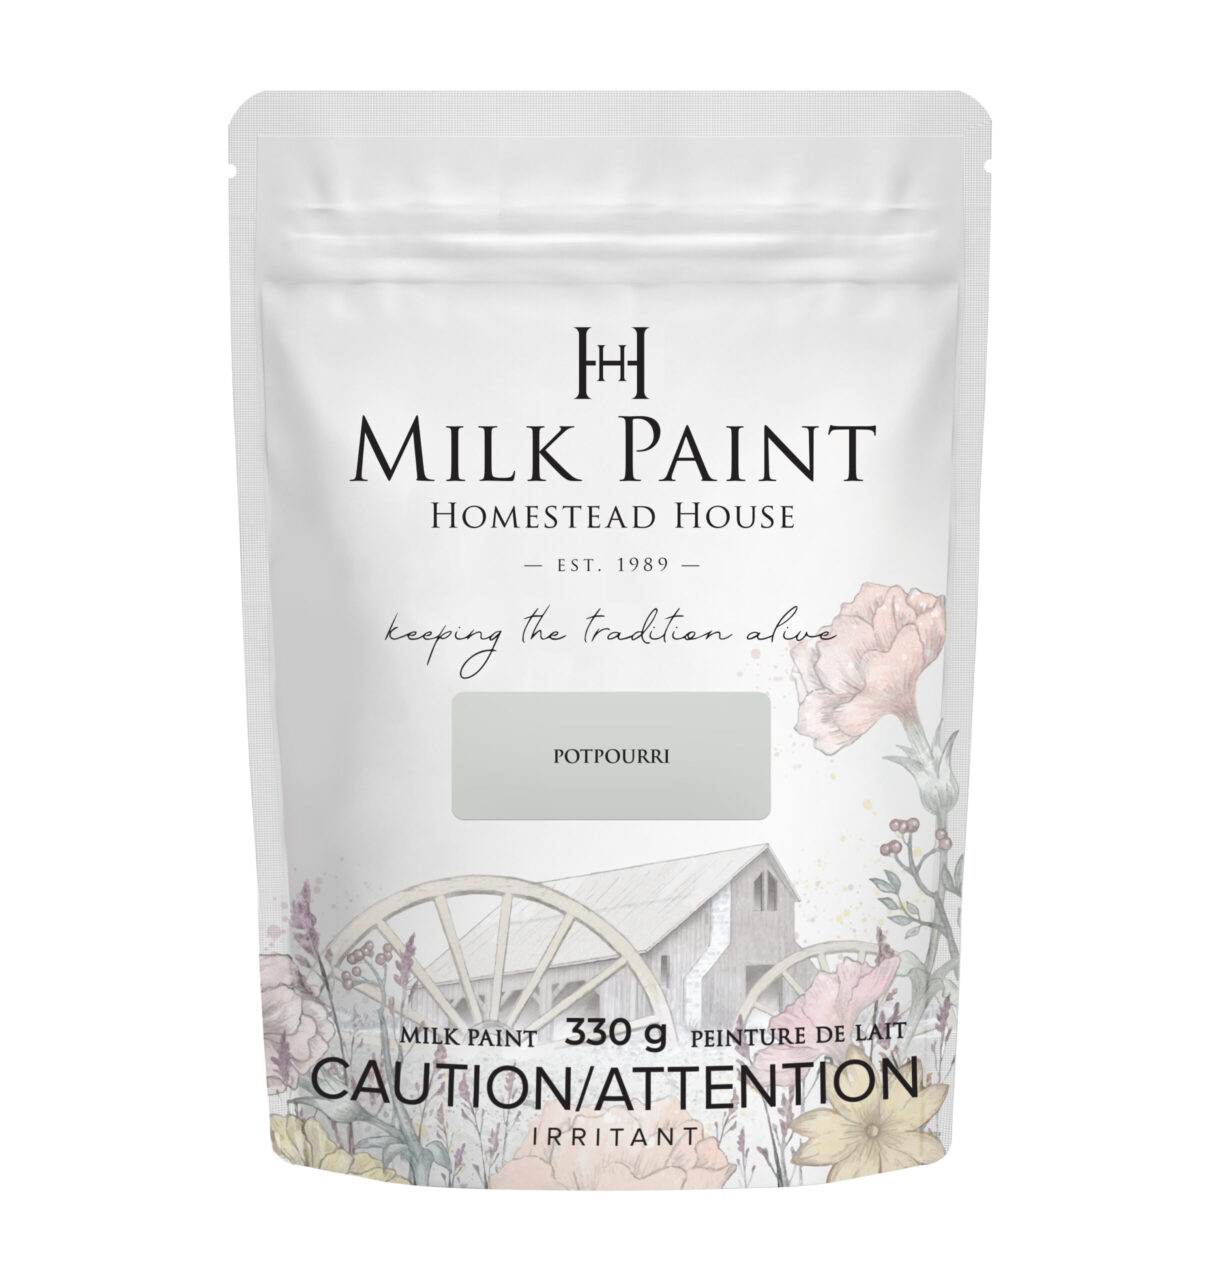 Bag of milk paint in the colour Potpourri